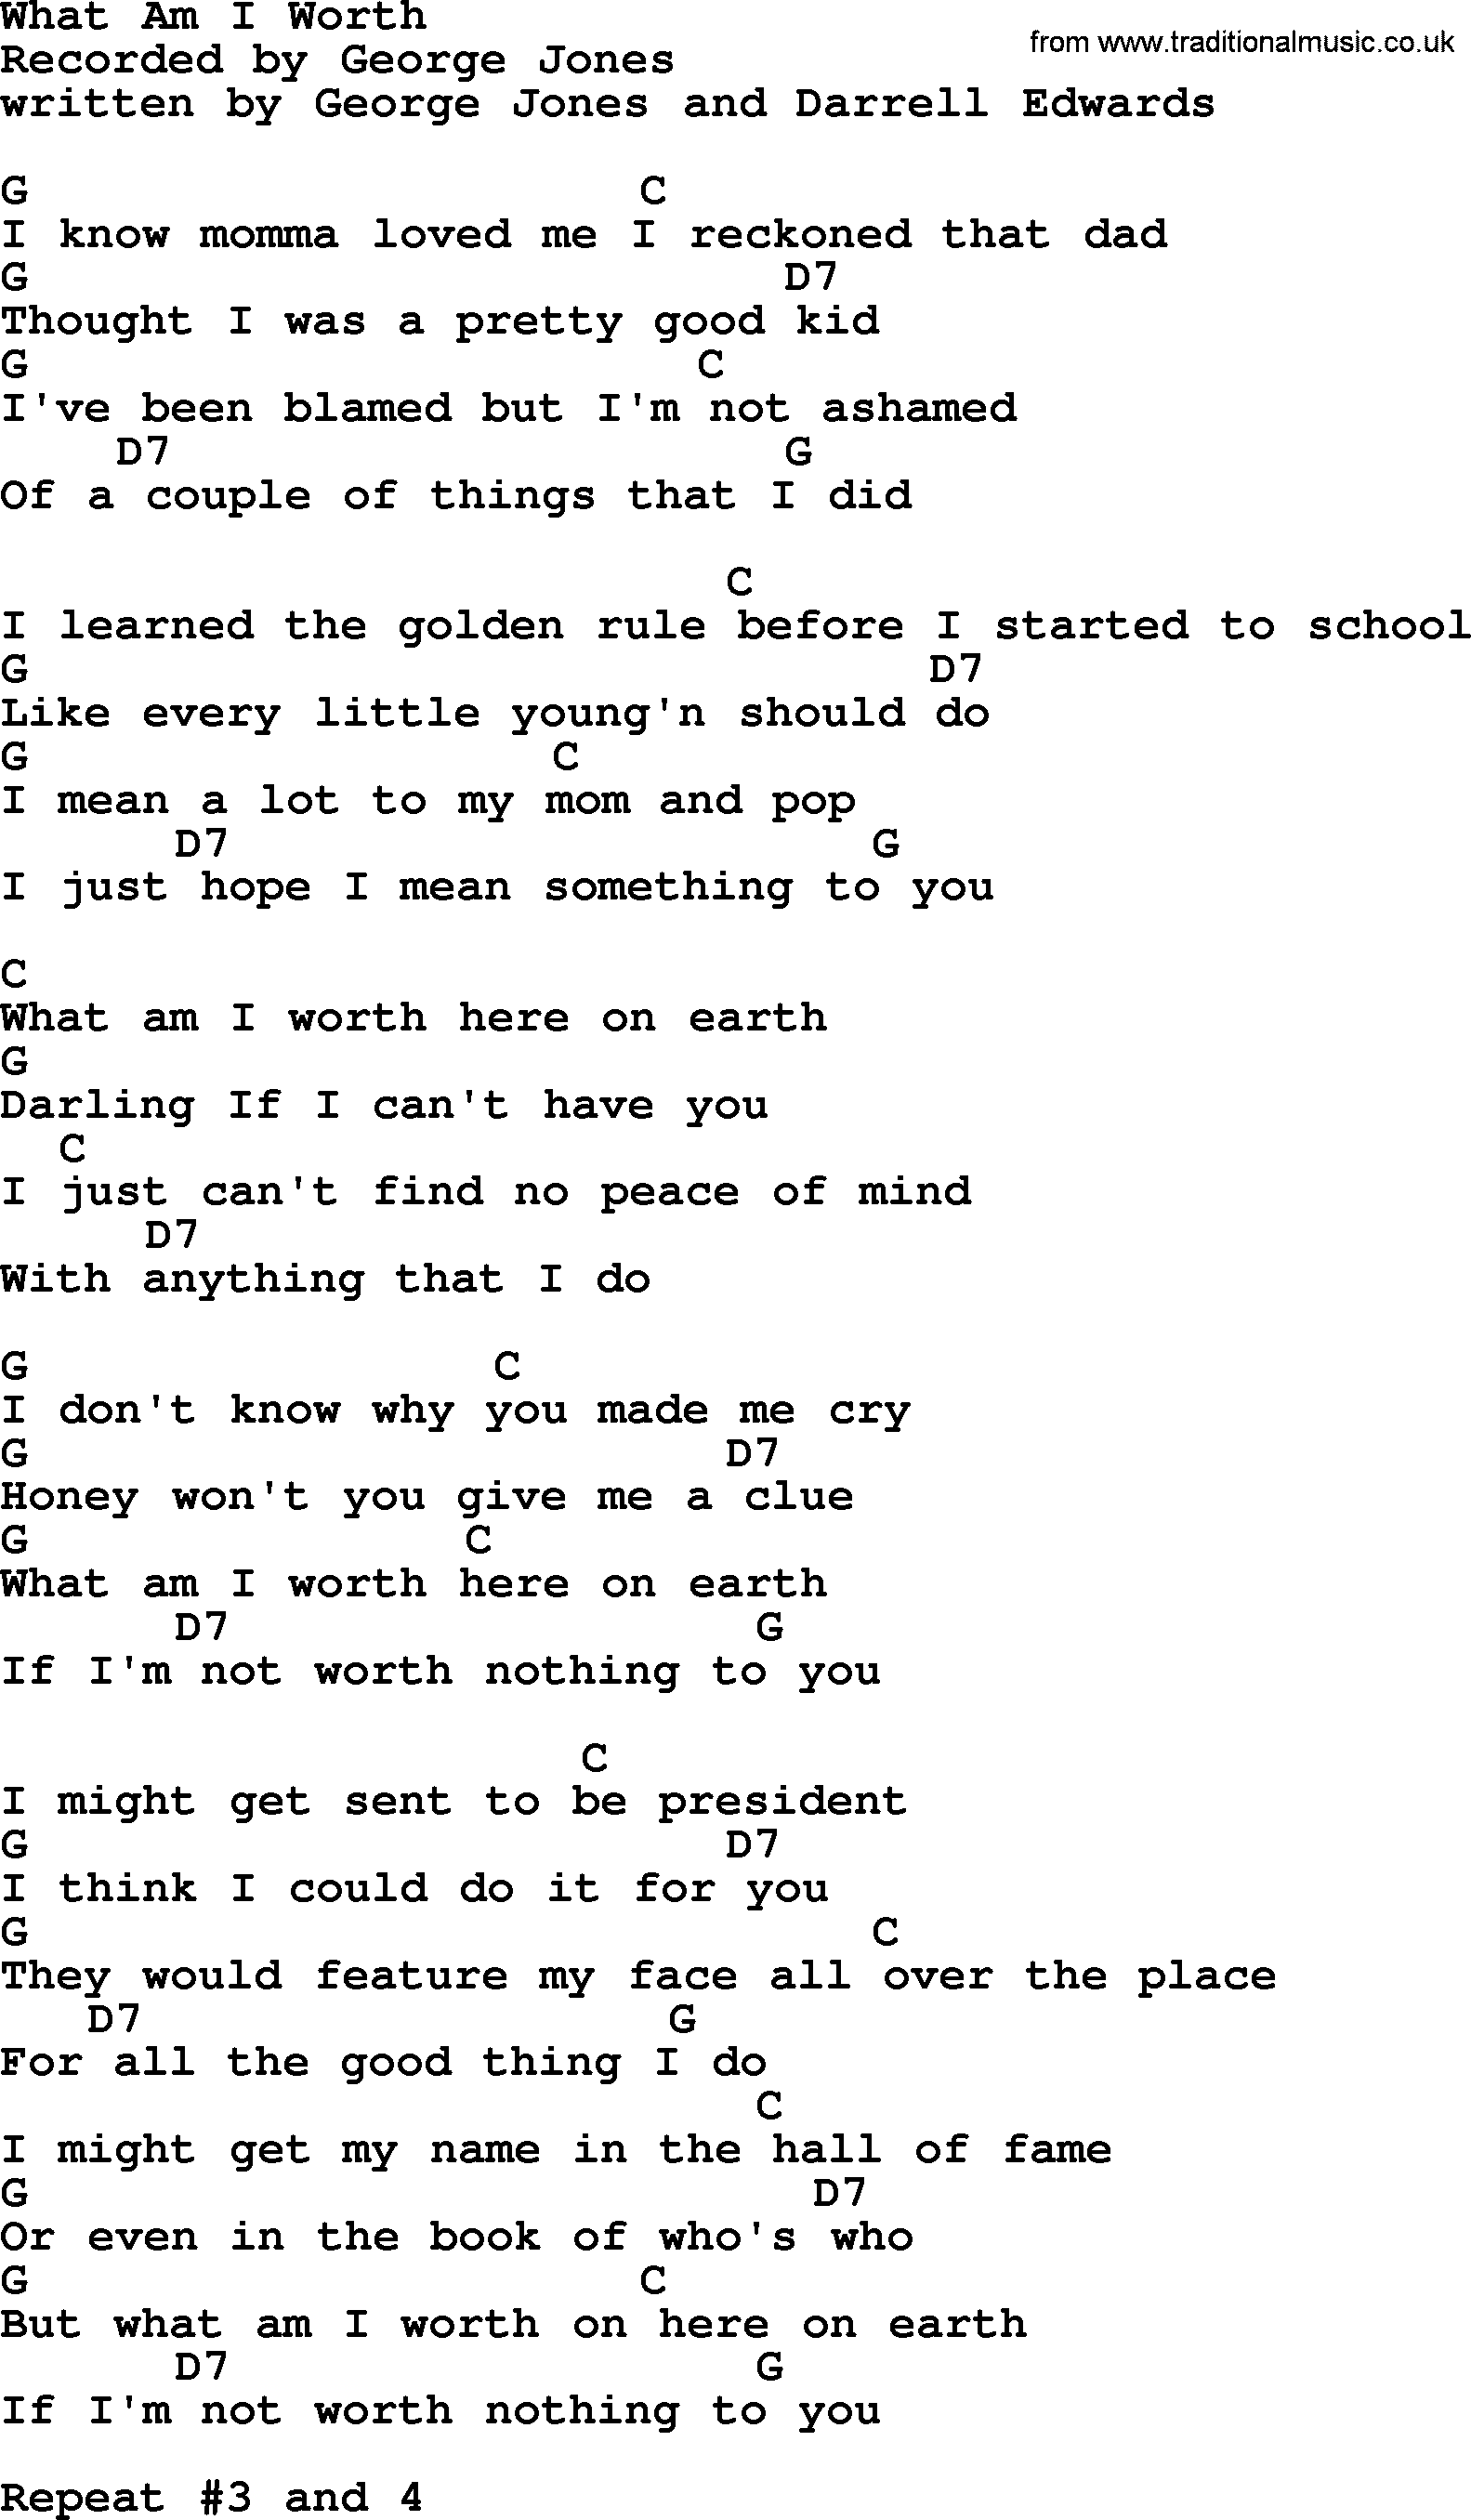 George Jones song: What Am I Worth, lyrics and chords